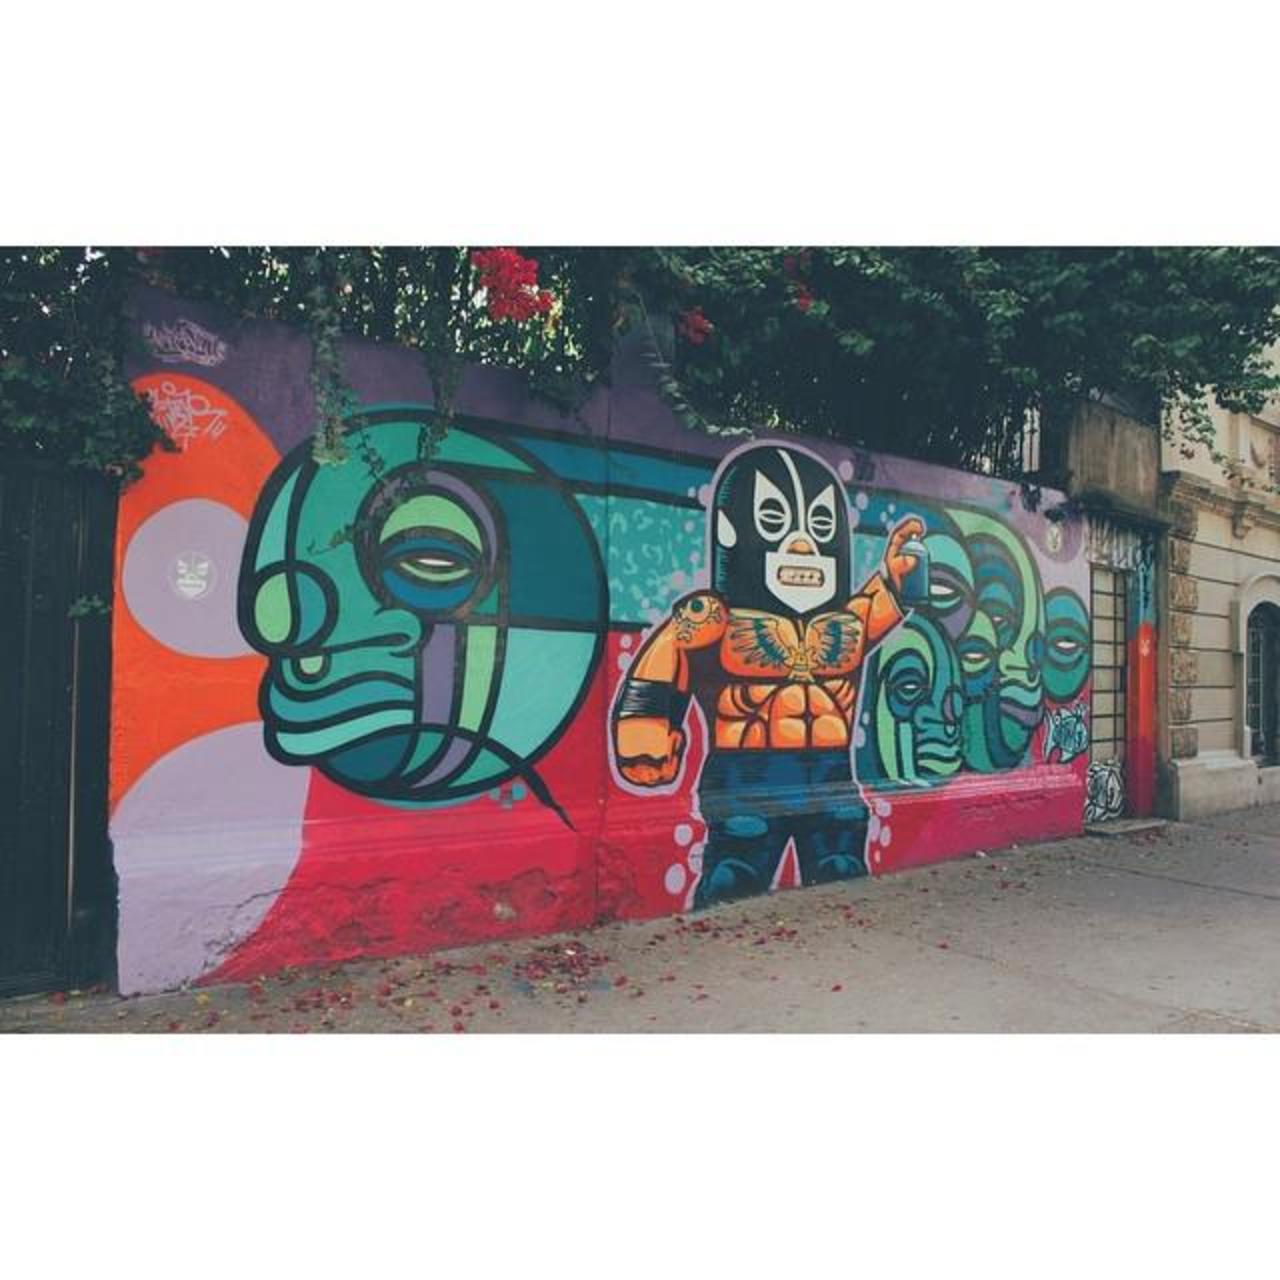 Wrestler Artist | #Amrastyle #Star27 #UrbanArt #StreetArt #Art #Graffiti #StreetArtChilango #StreetArtMexico #Mural… http://t.co/PnYKWIfY9S